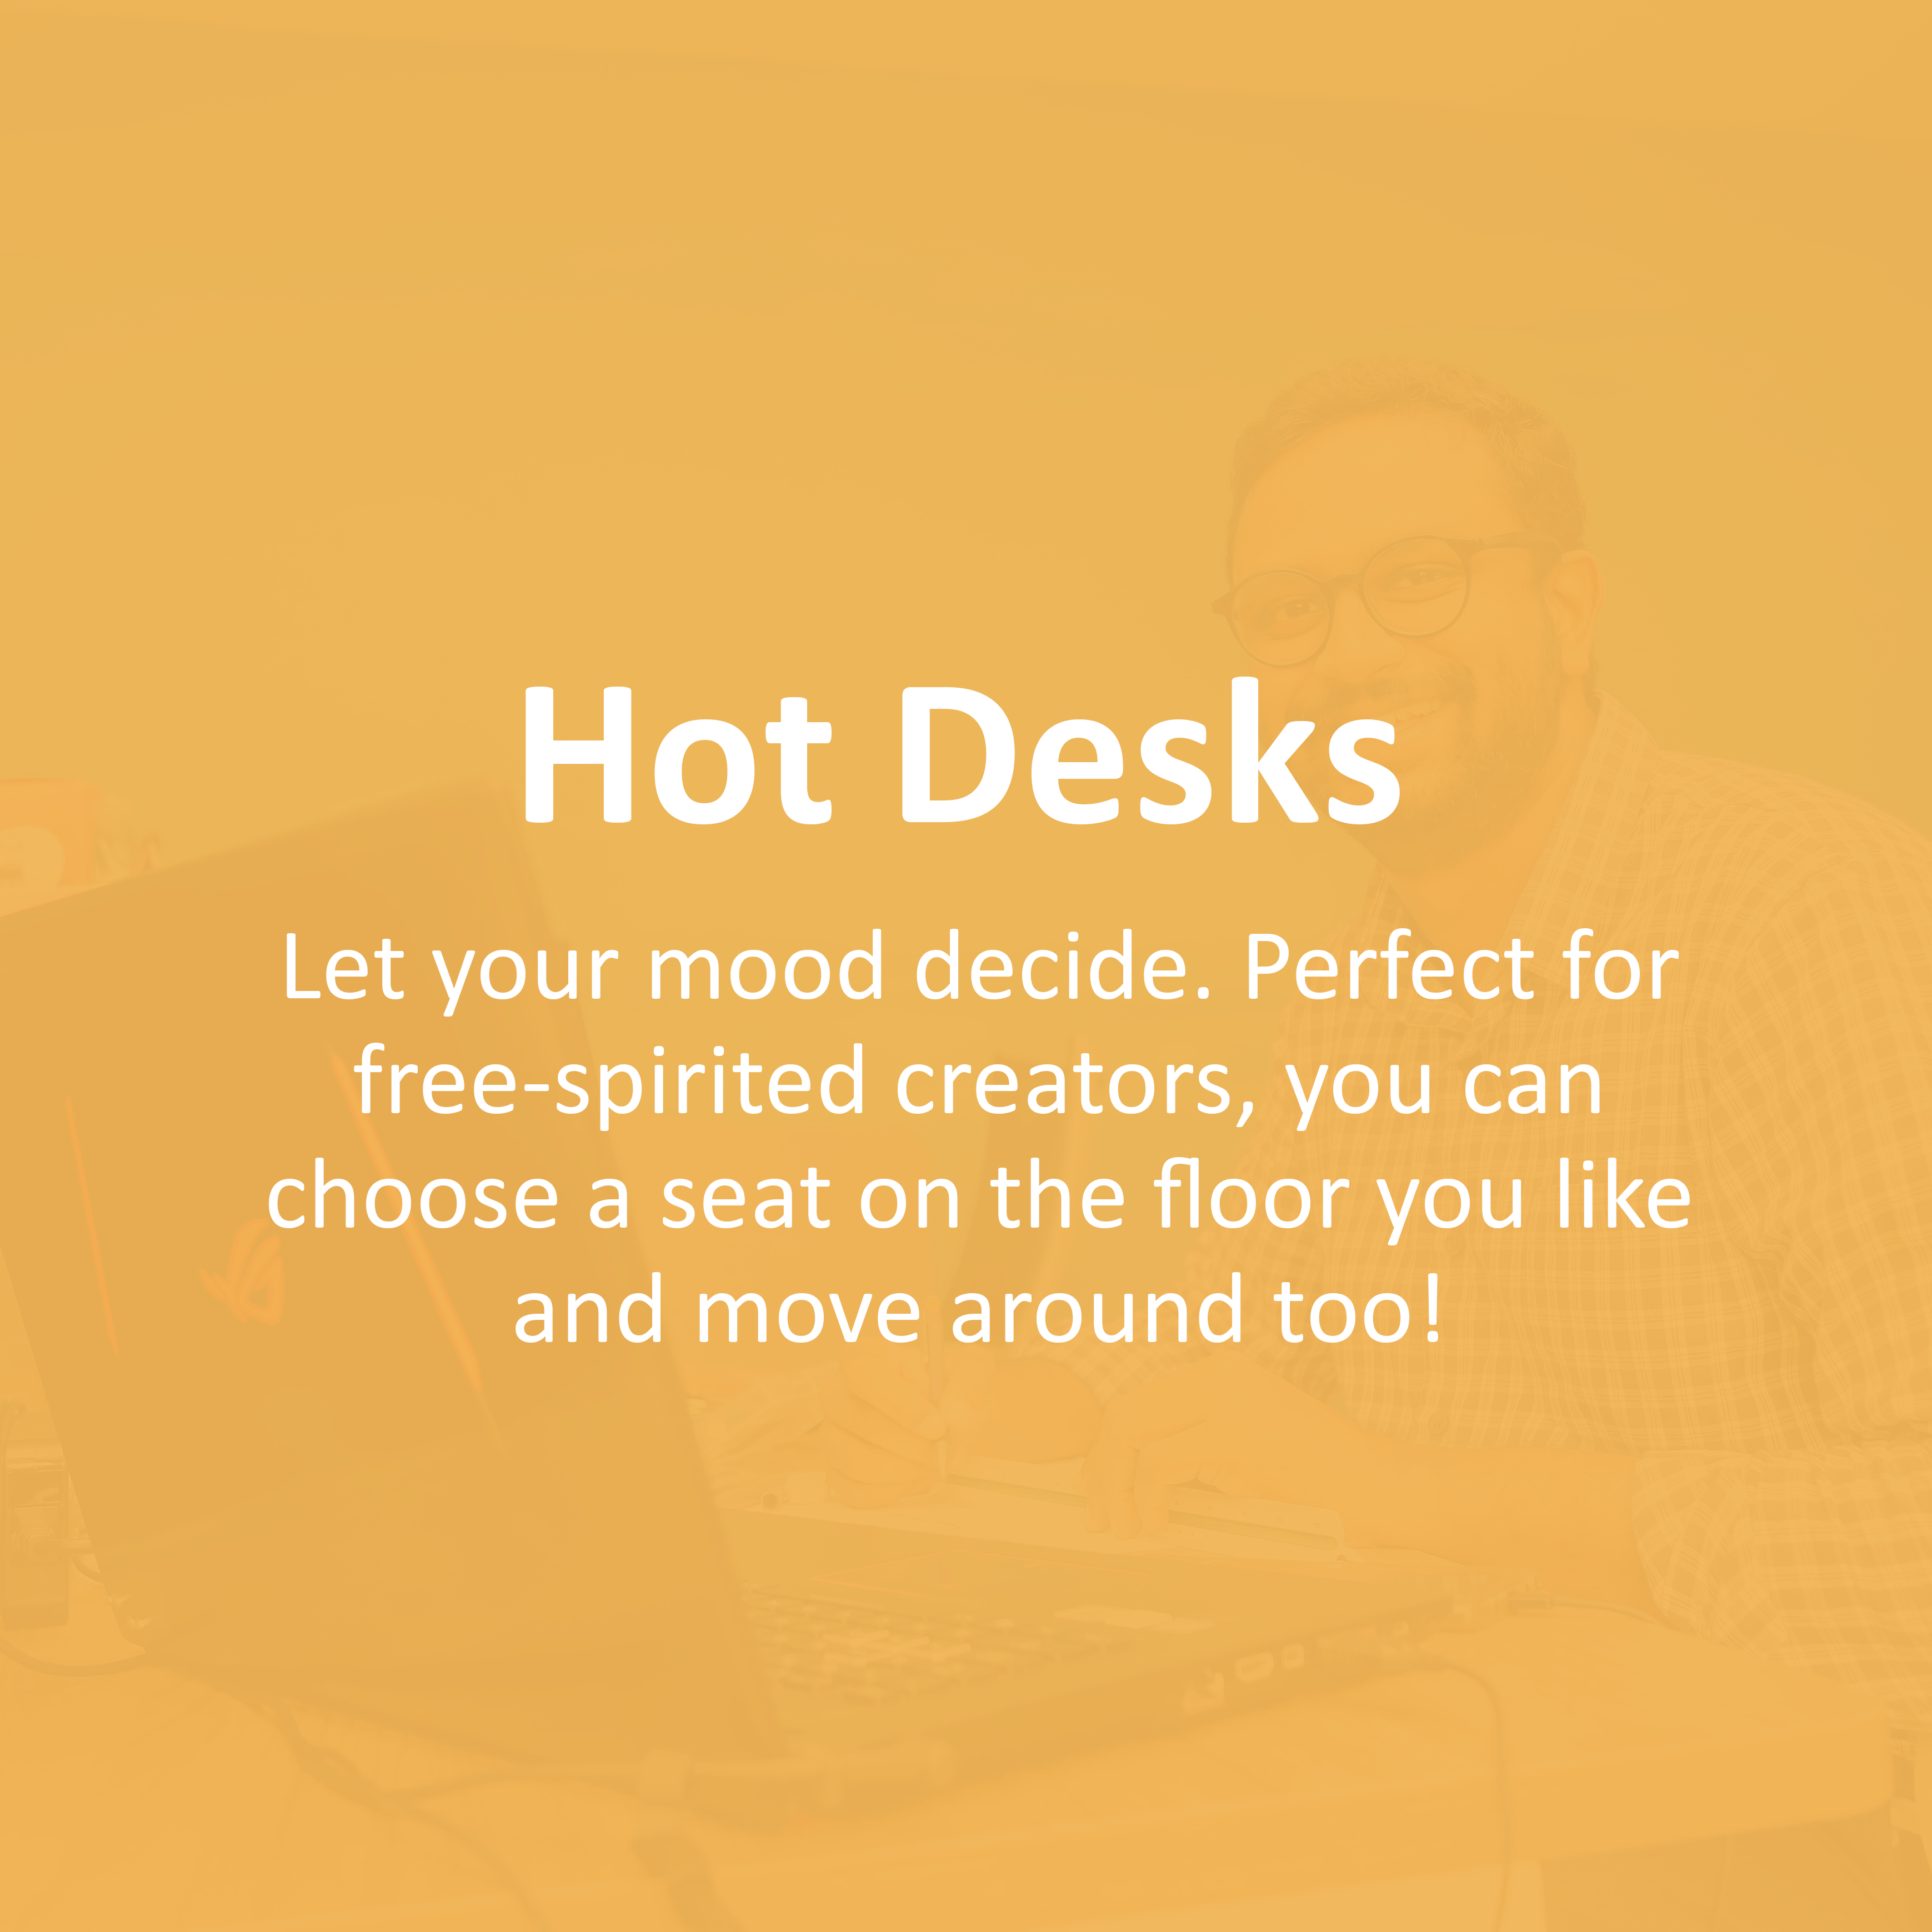 Hot Desks